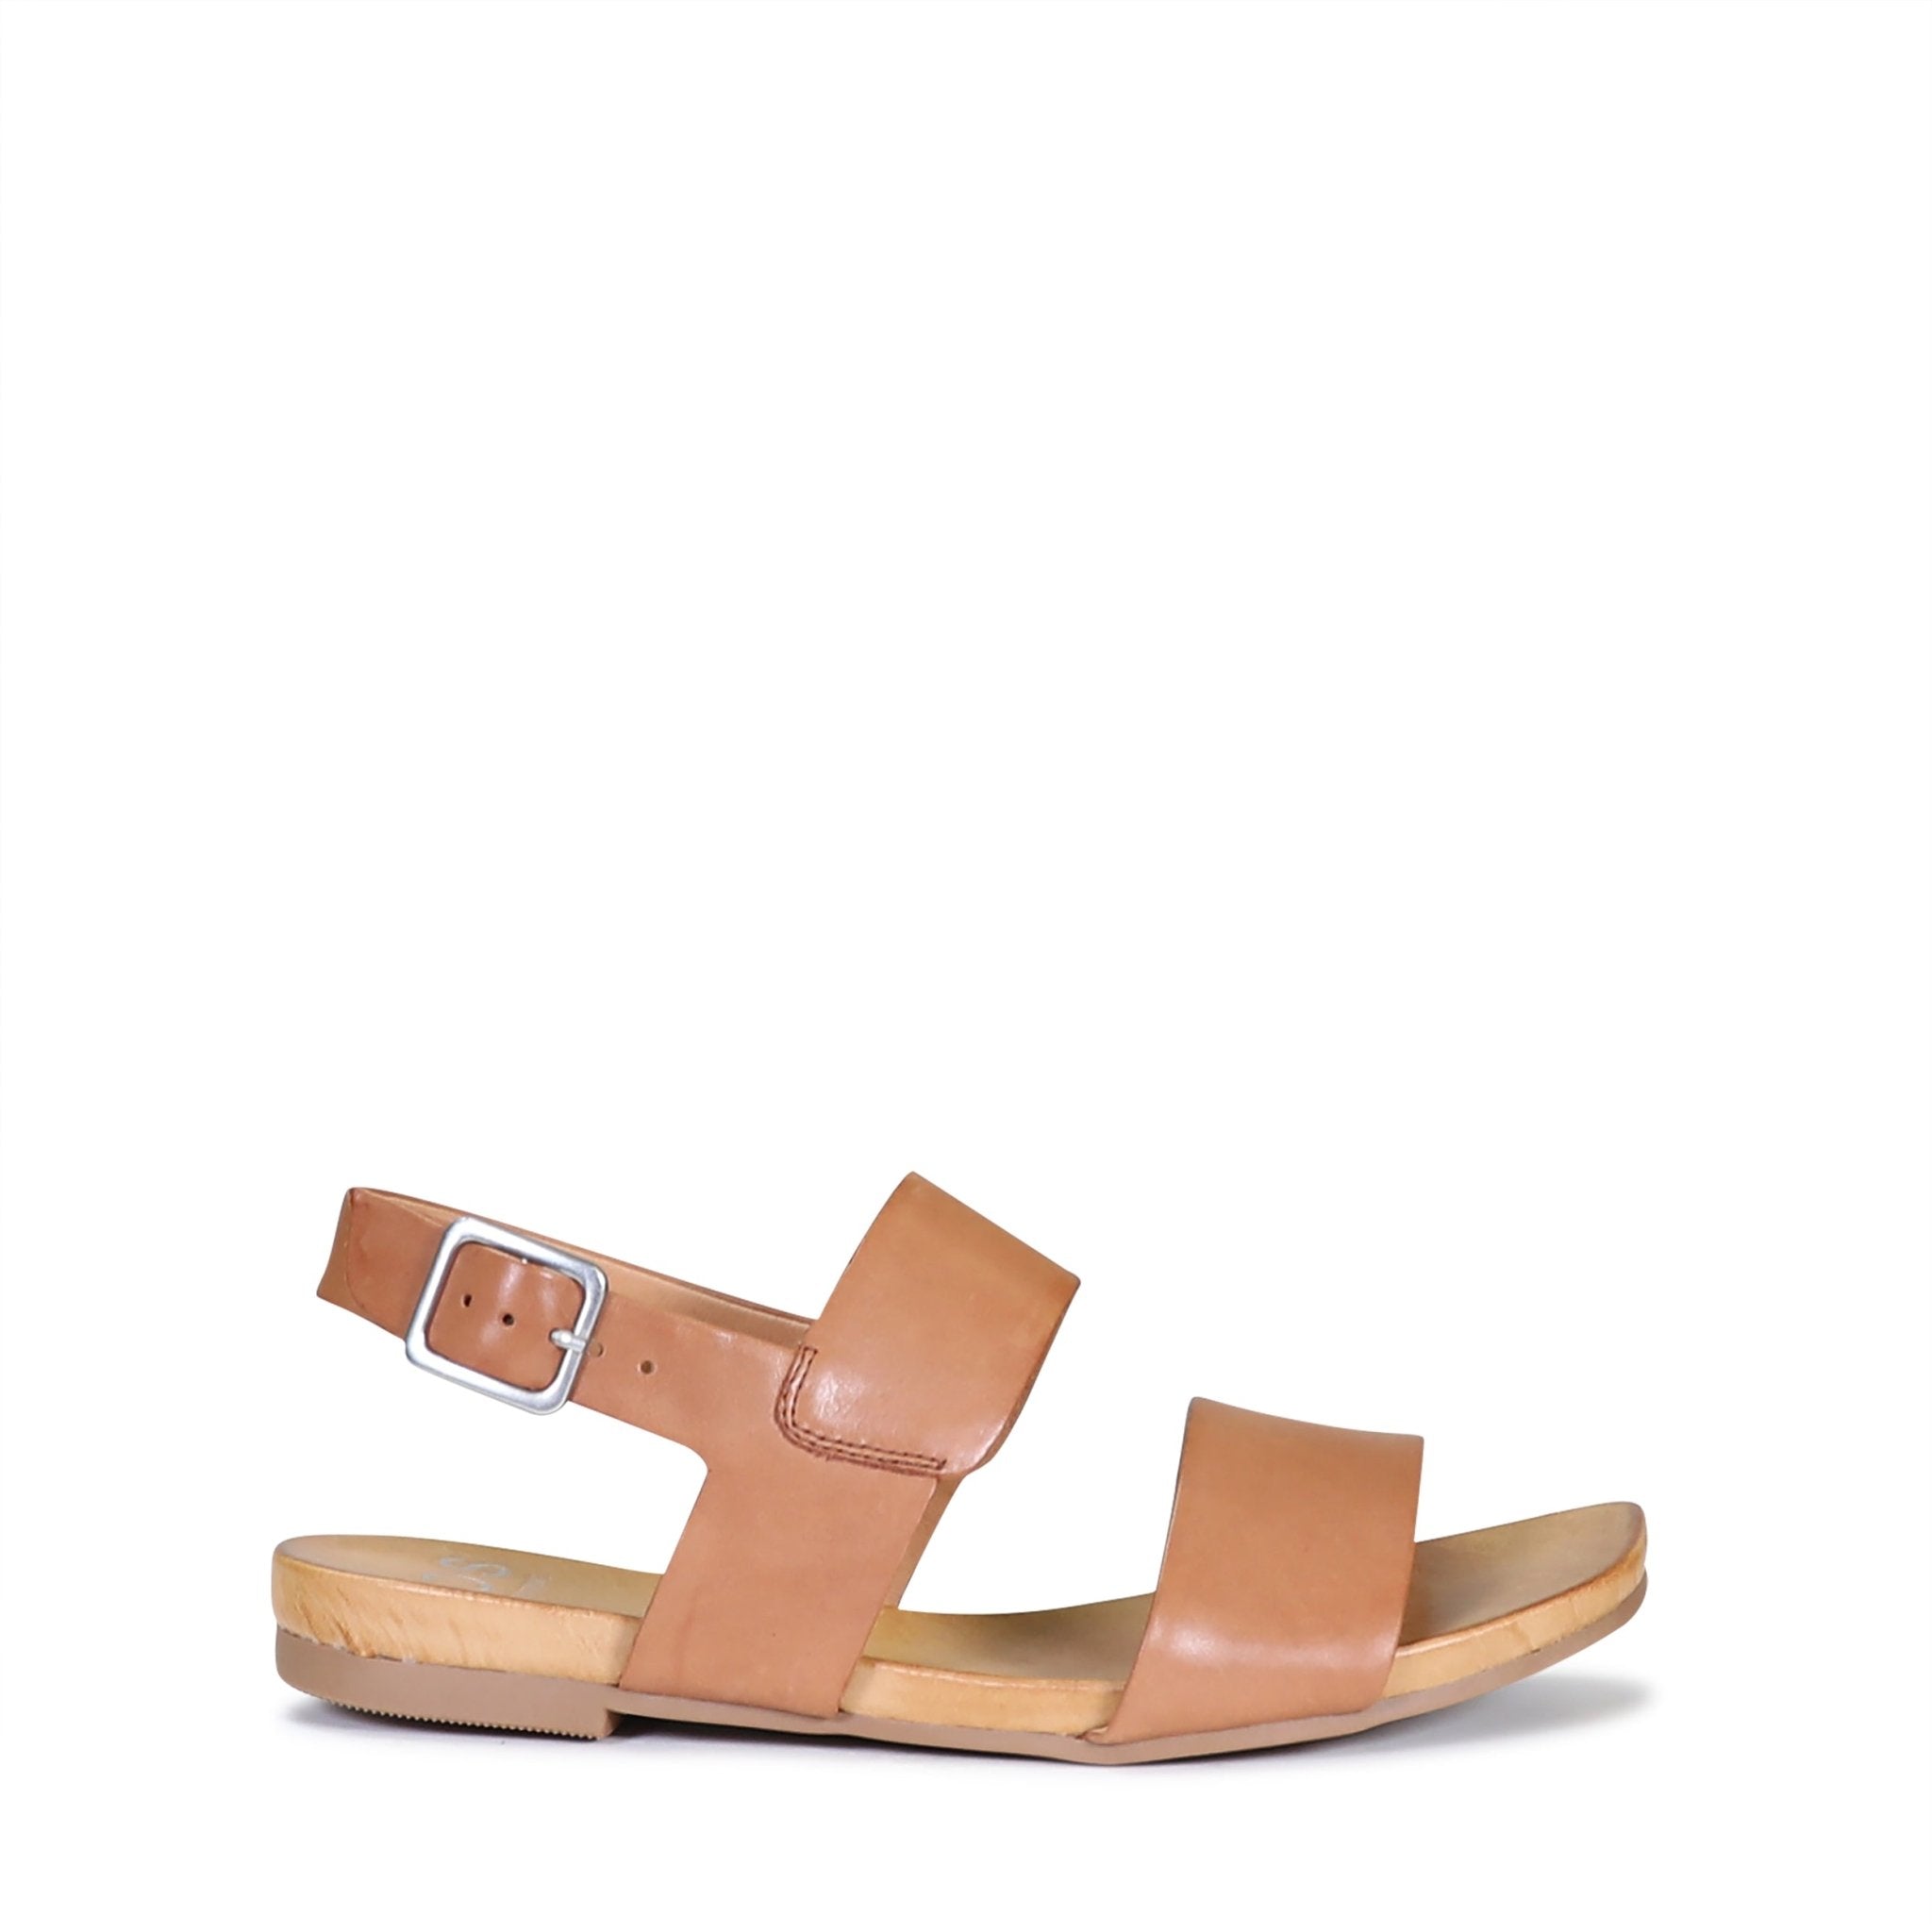 DANA - EOS Footwear - Sling Back Sandals #color_Brandy